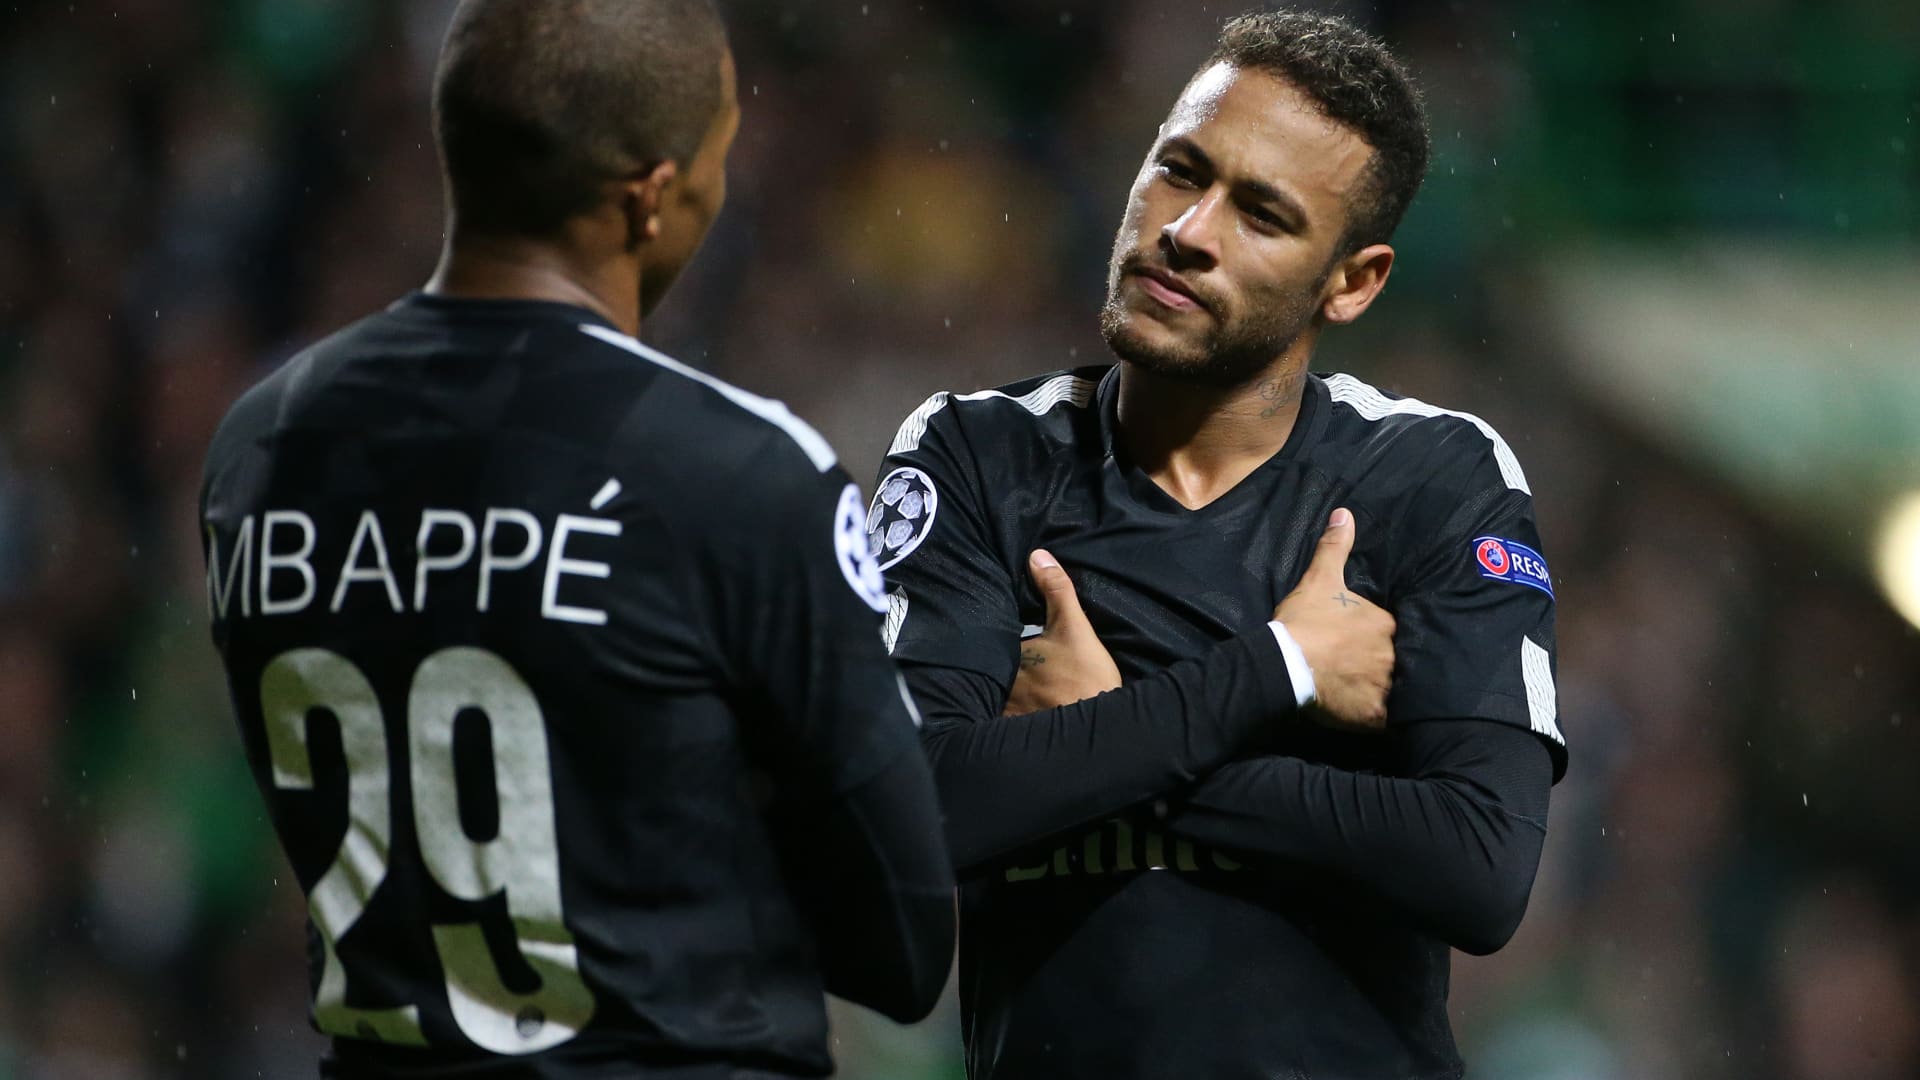 Saudi soccer league lures Brazilian star Neymar as it seeks to attract